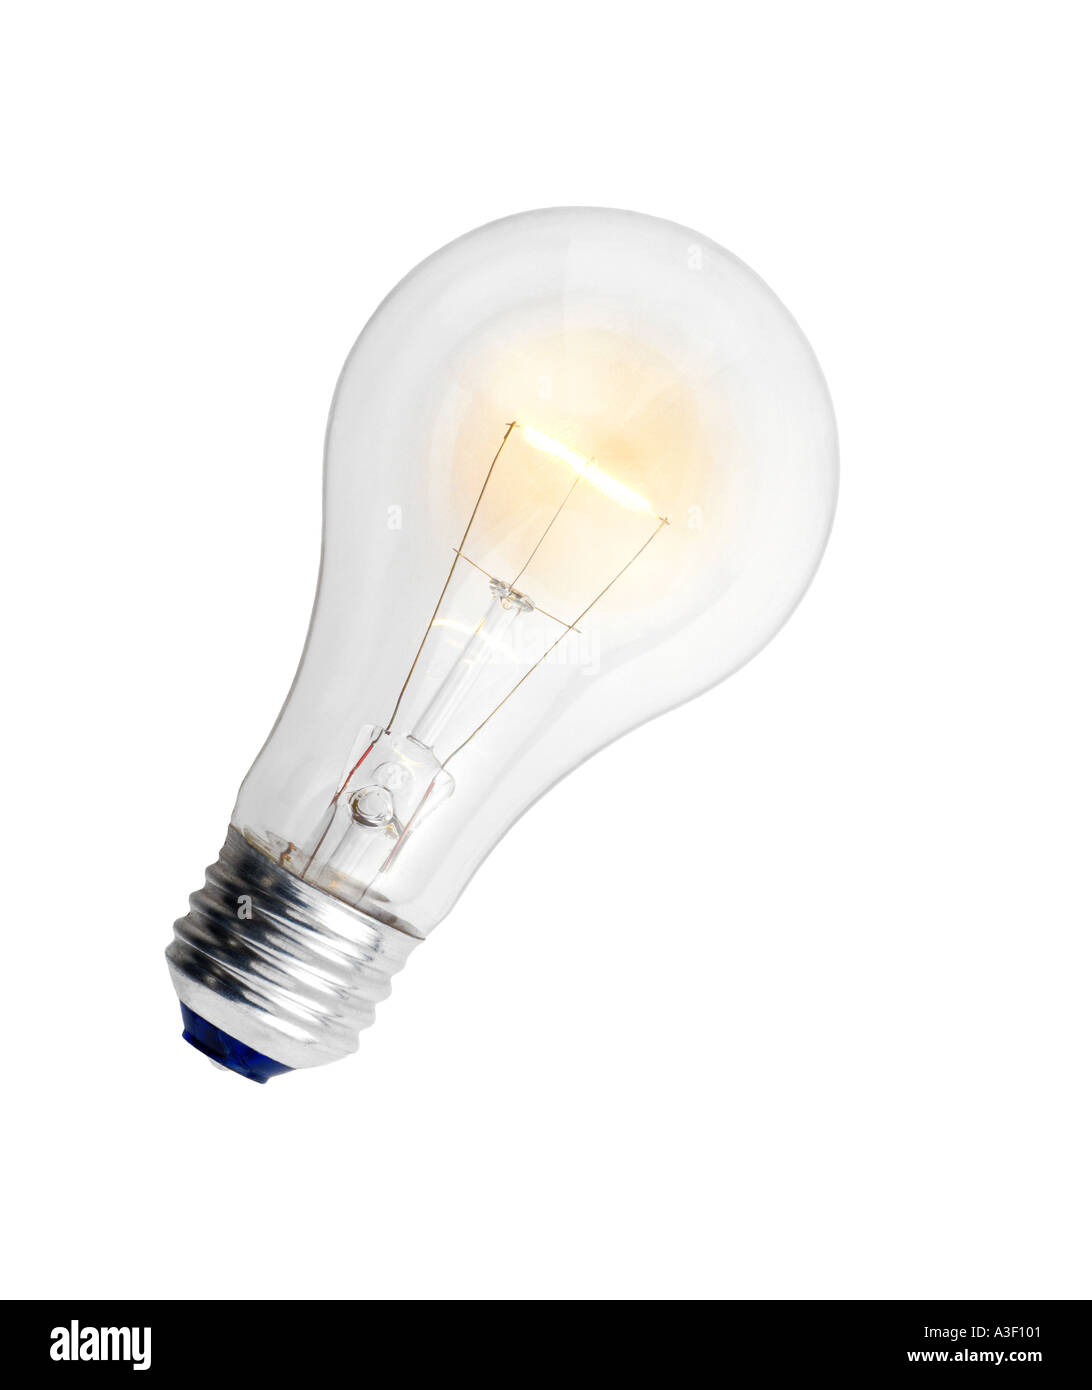 Bombilla de luz de alumbrado o encendido de luz incandescente claro sobre  fondo blanco Fotografía de stock - Alamy